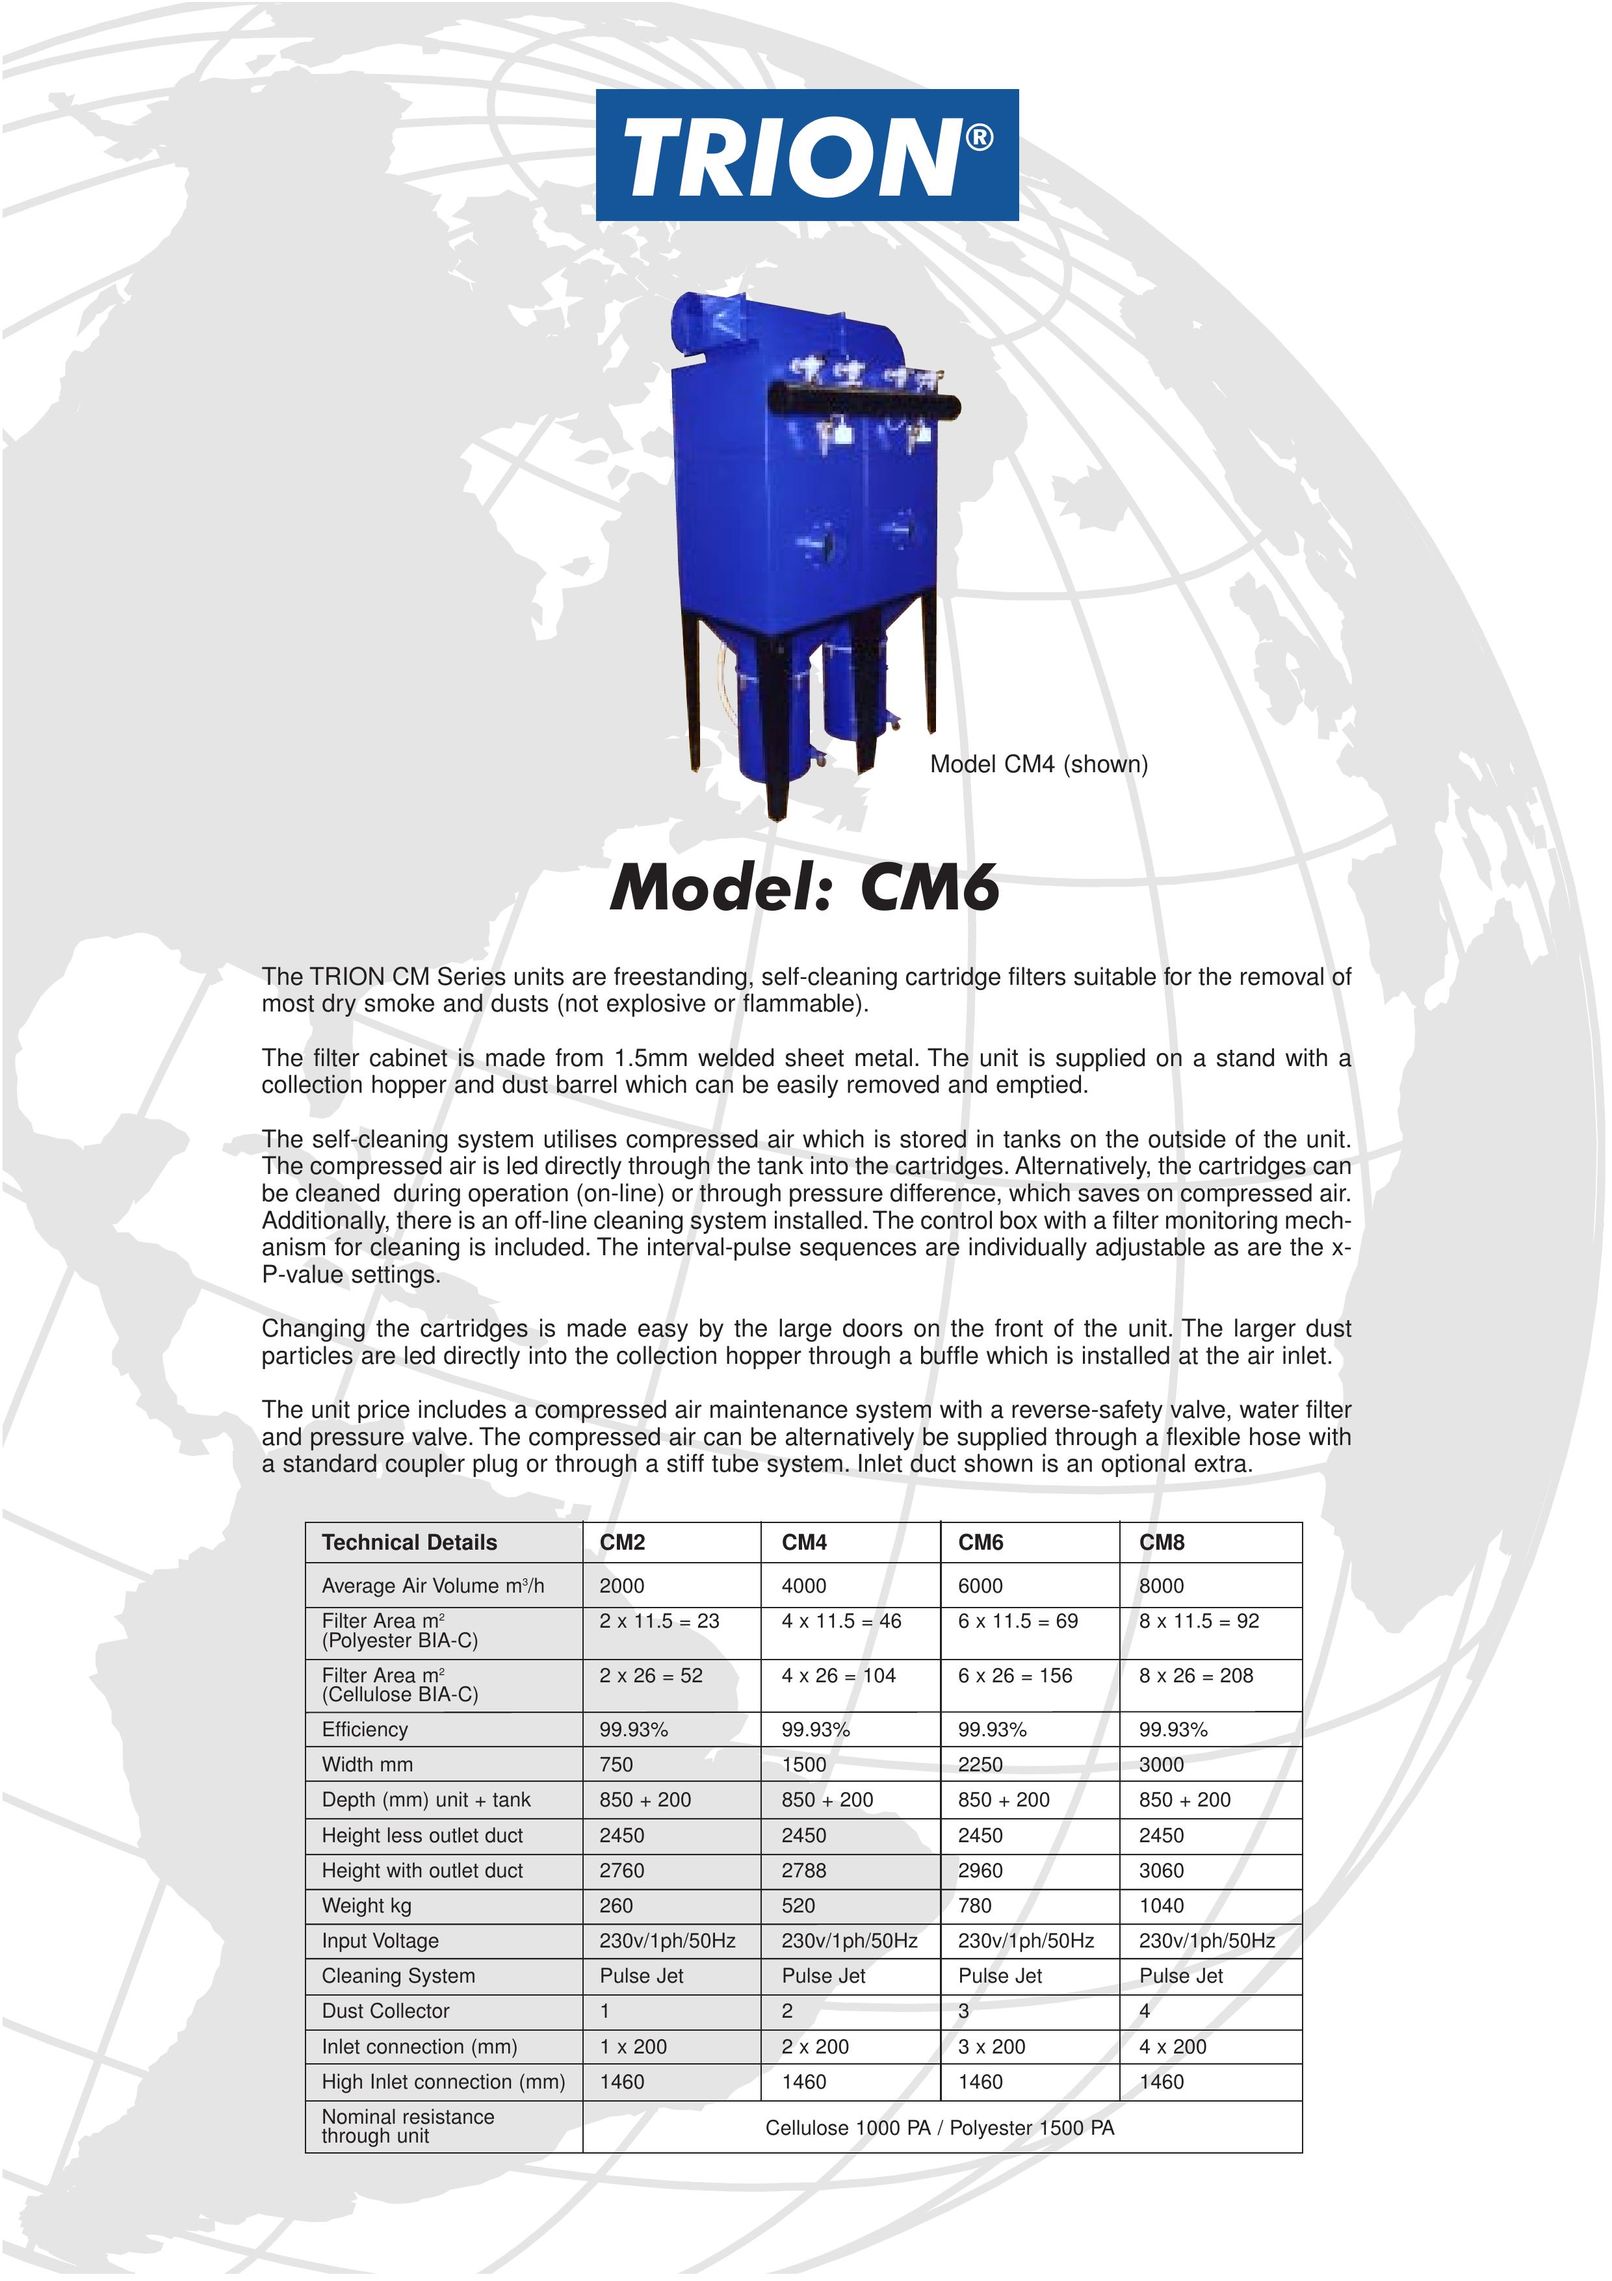 Trion CM2 Air Cleaner User Manual